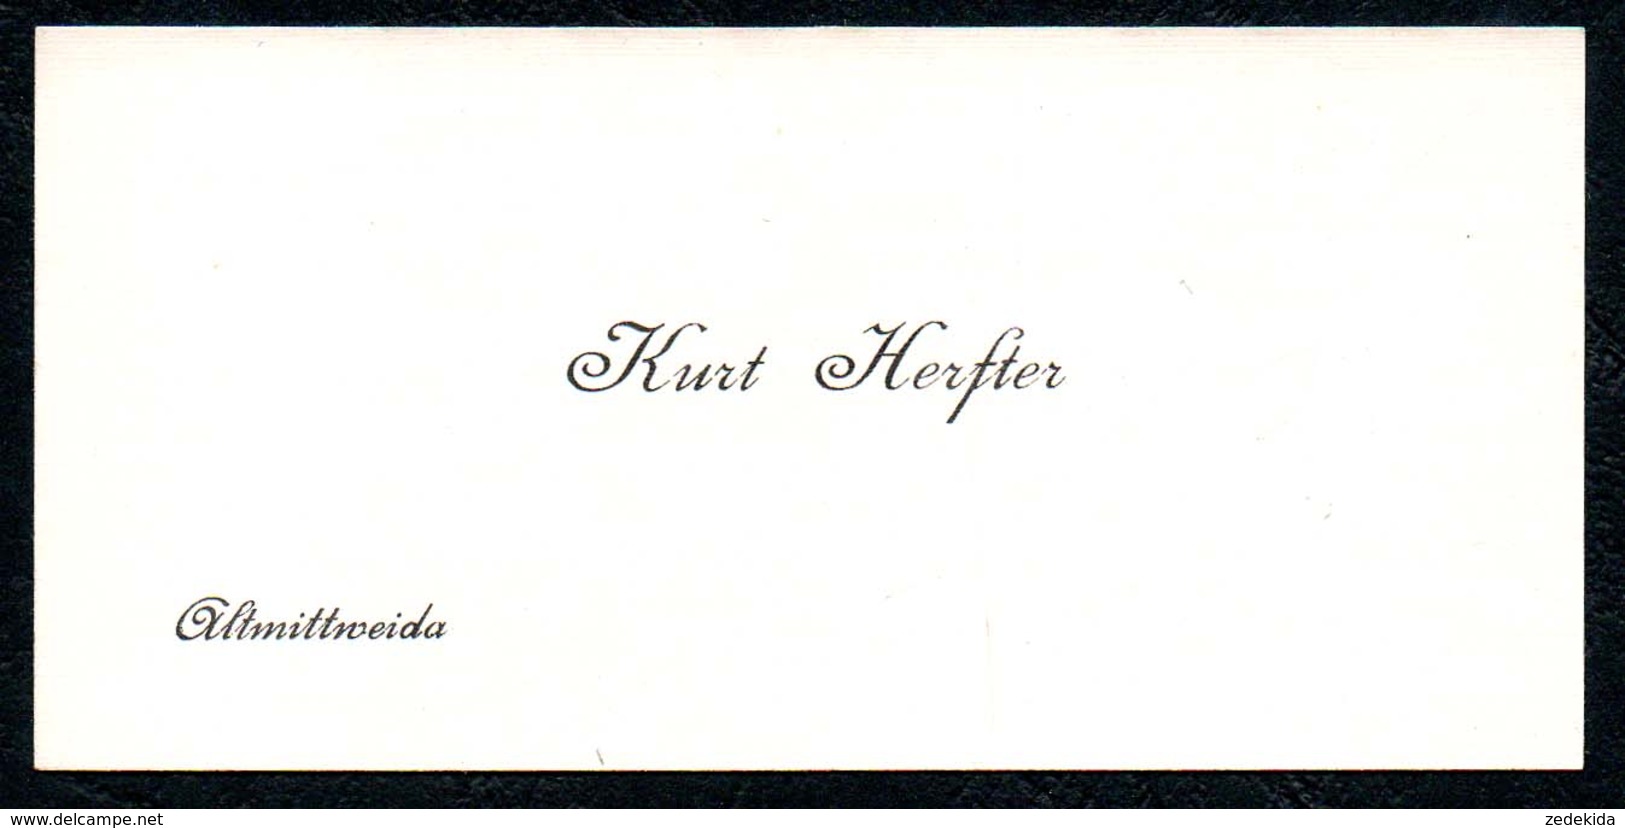 B5941 - Altmittweida Mittweida - Kurt Herfter - Visitenkarte - Visitenkarten